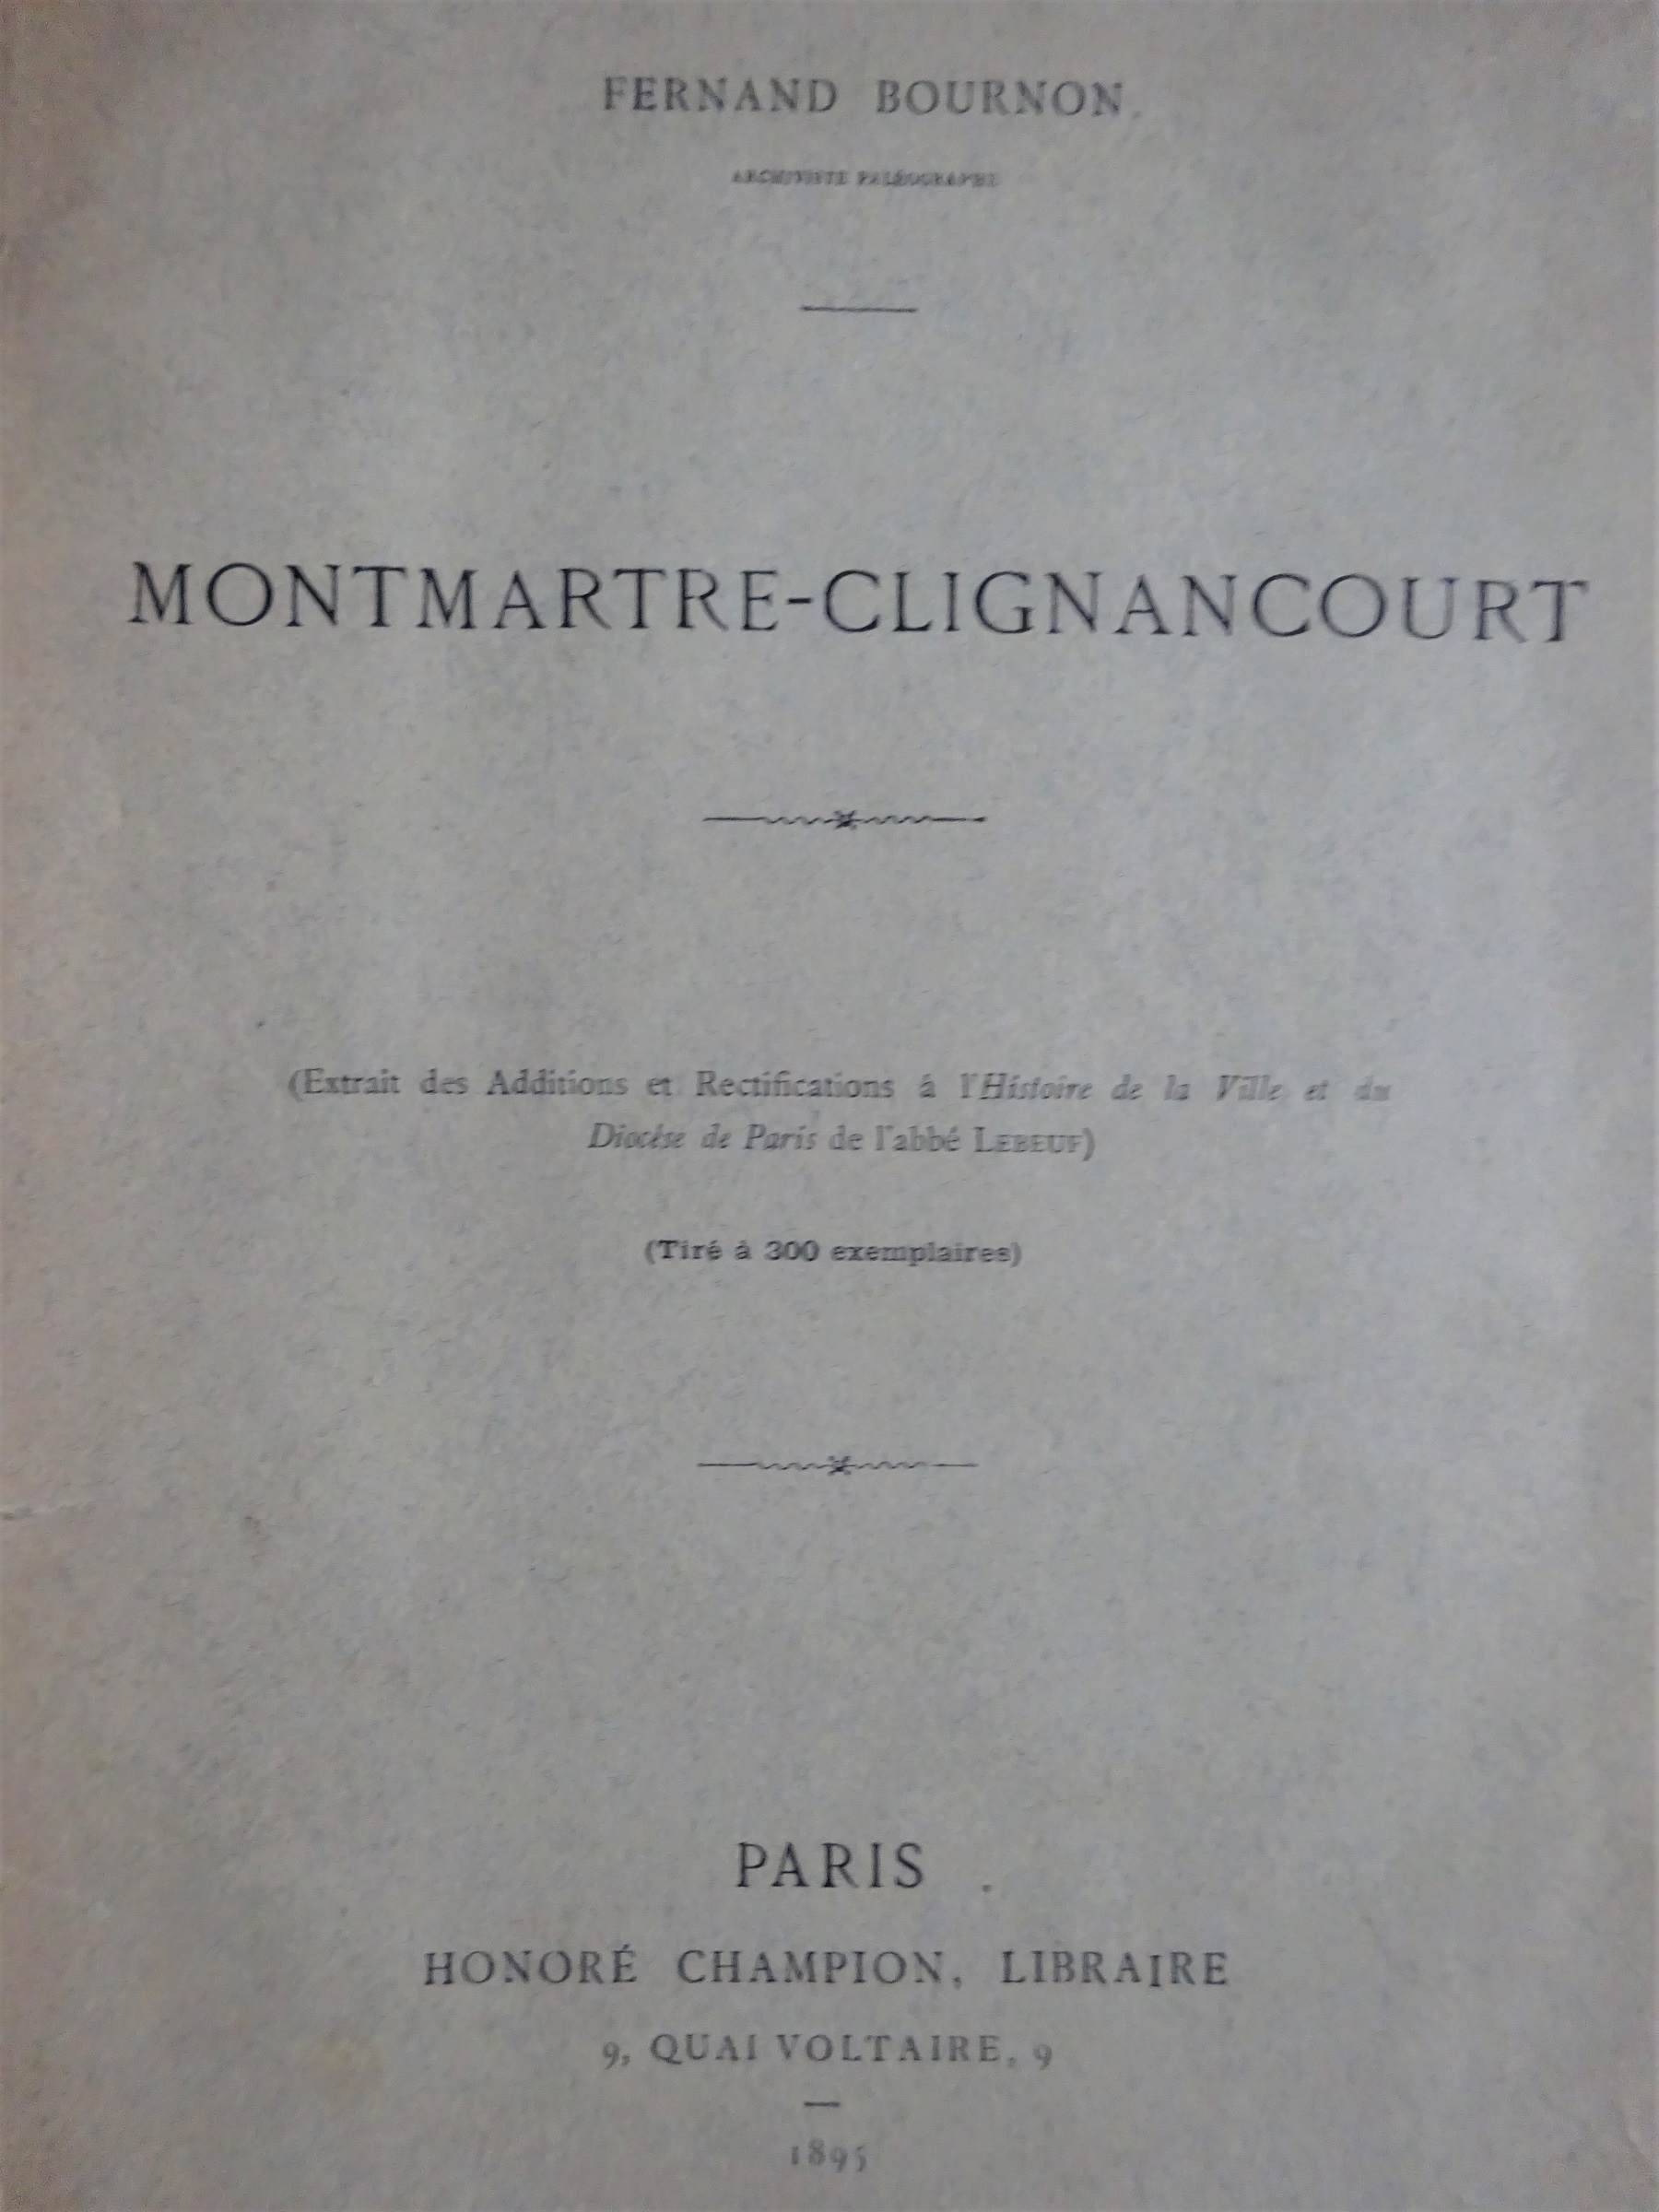 Montmartre-Clignancourt